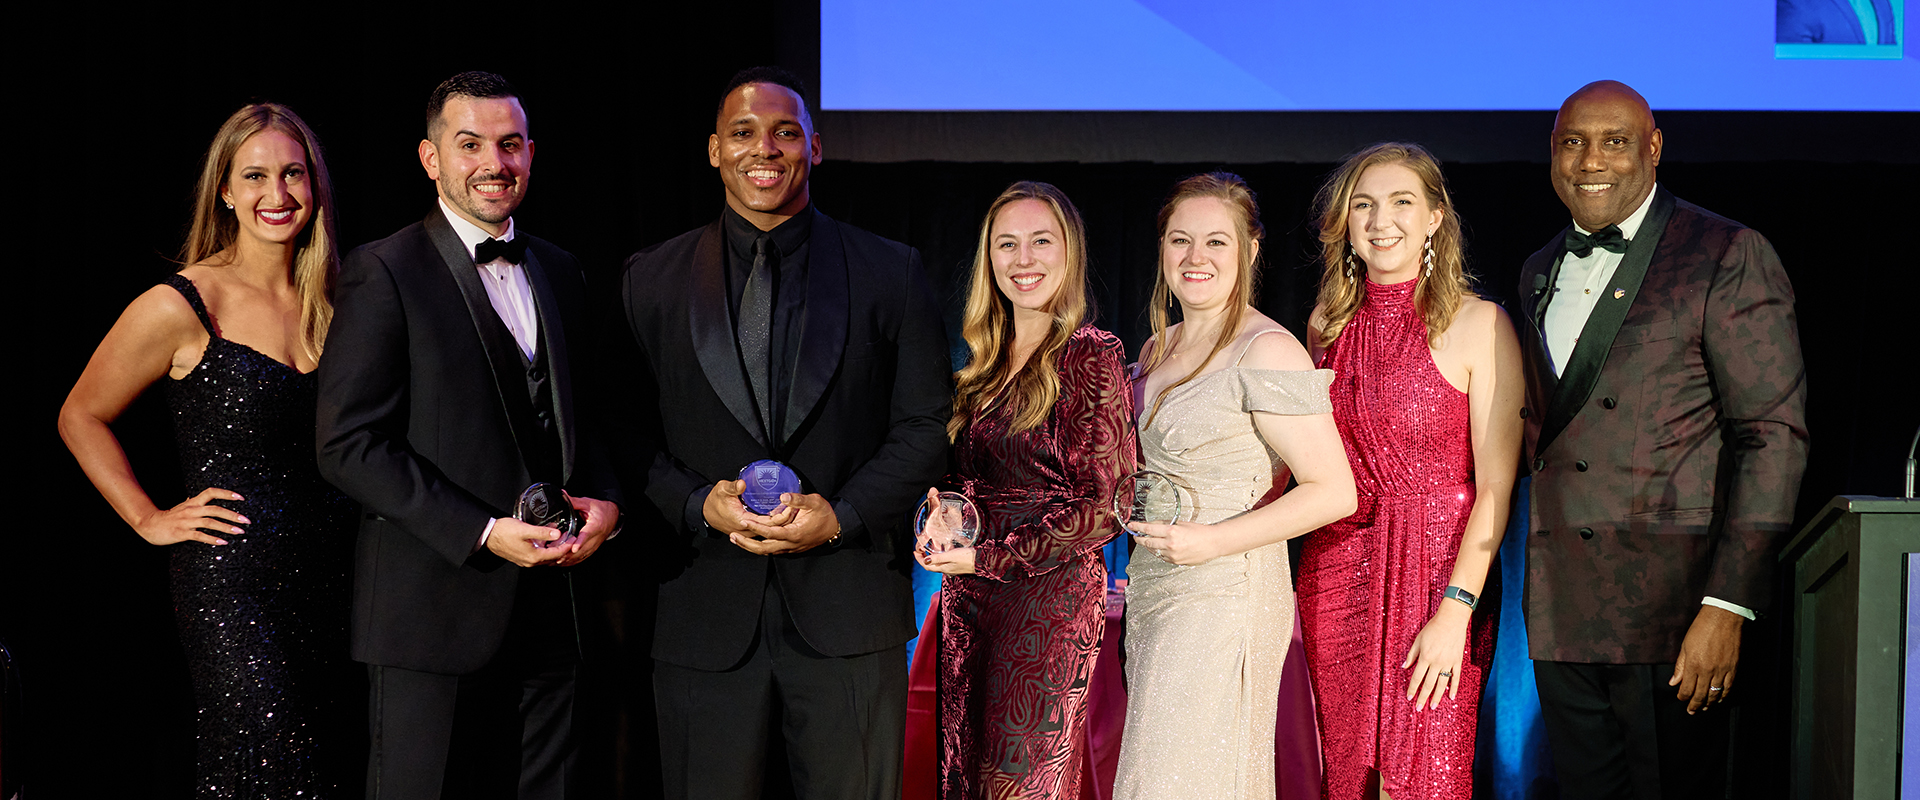 NextGen Financial Services Profession Award winners